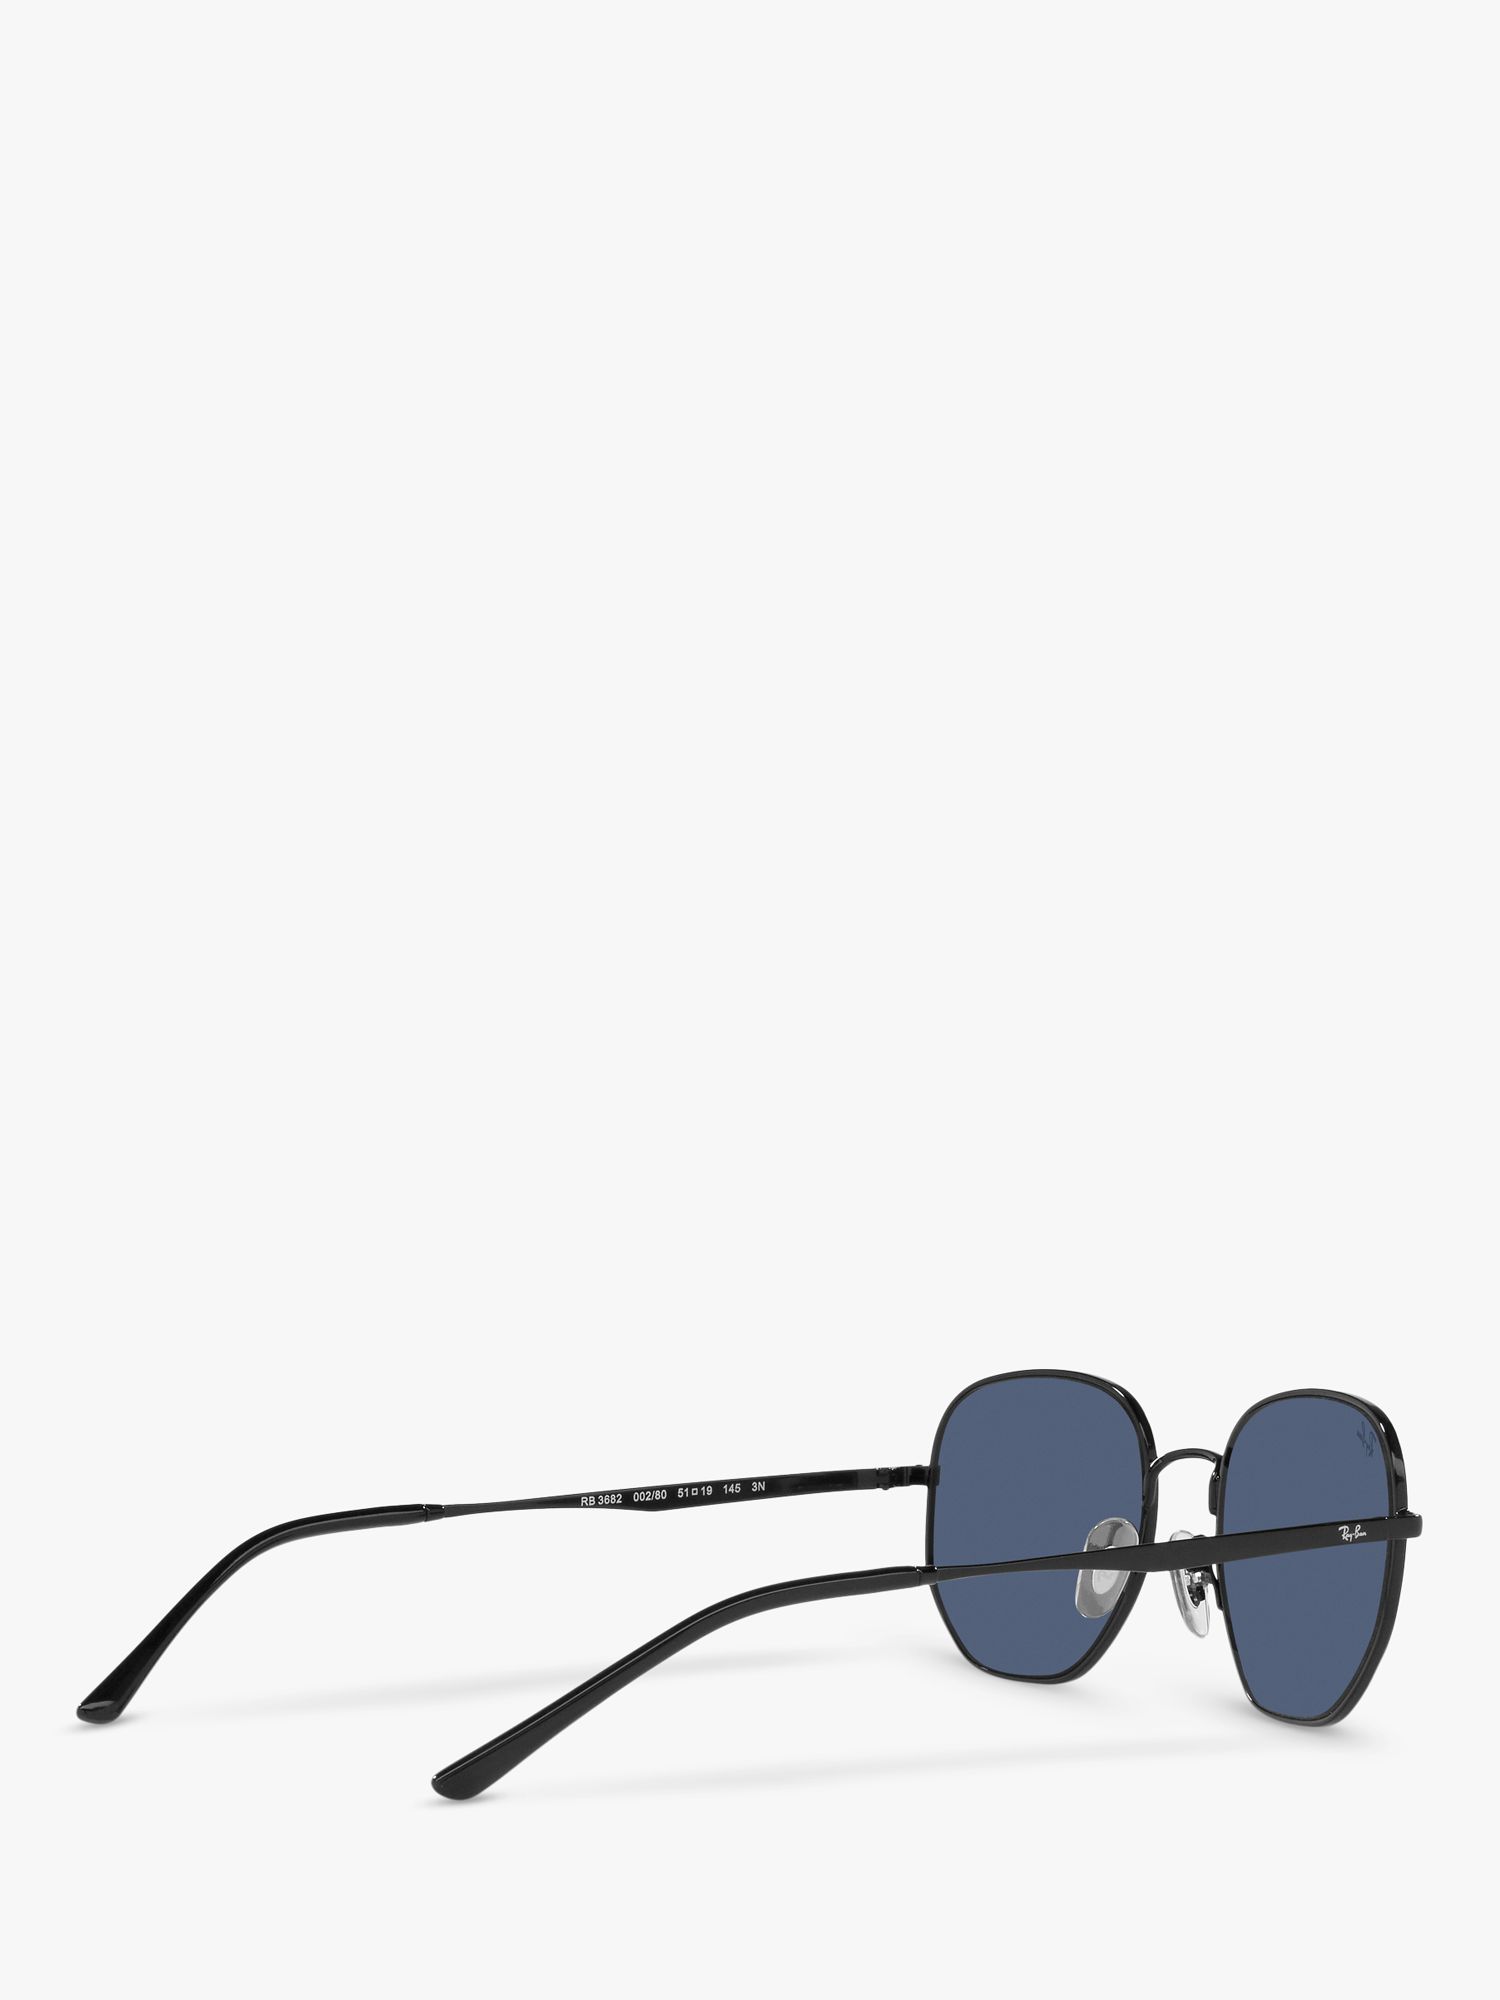 Buy Ray-Ban RB3682 Unisex Irregular Sunglasses, Black/Blue Online at johnlewis.com